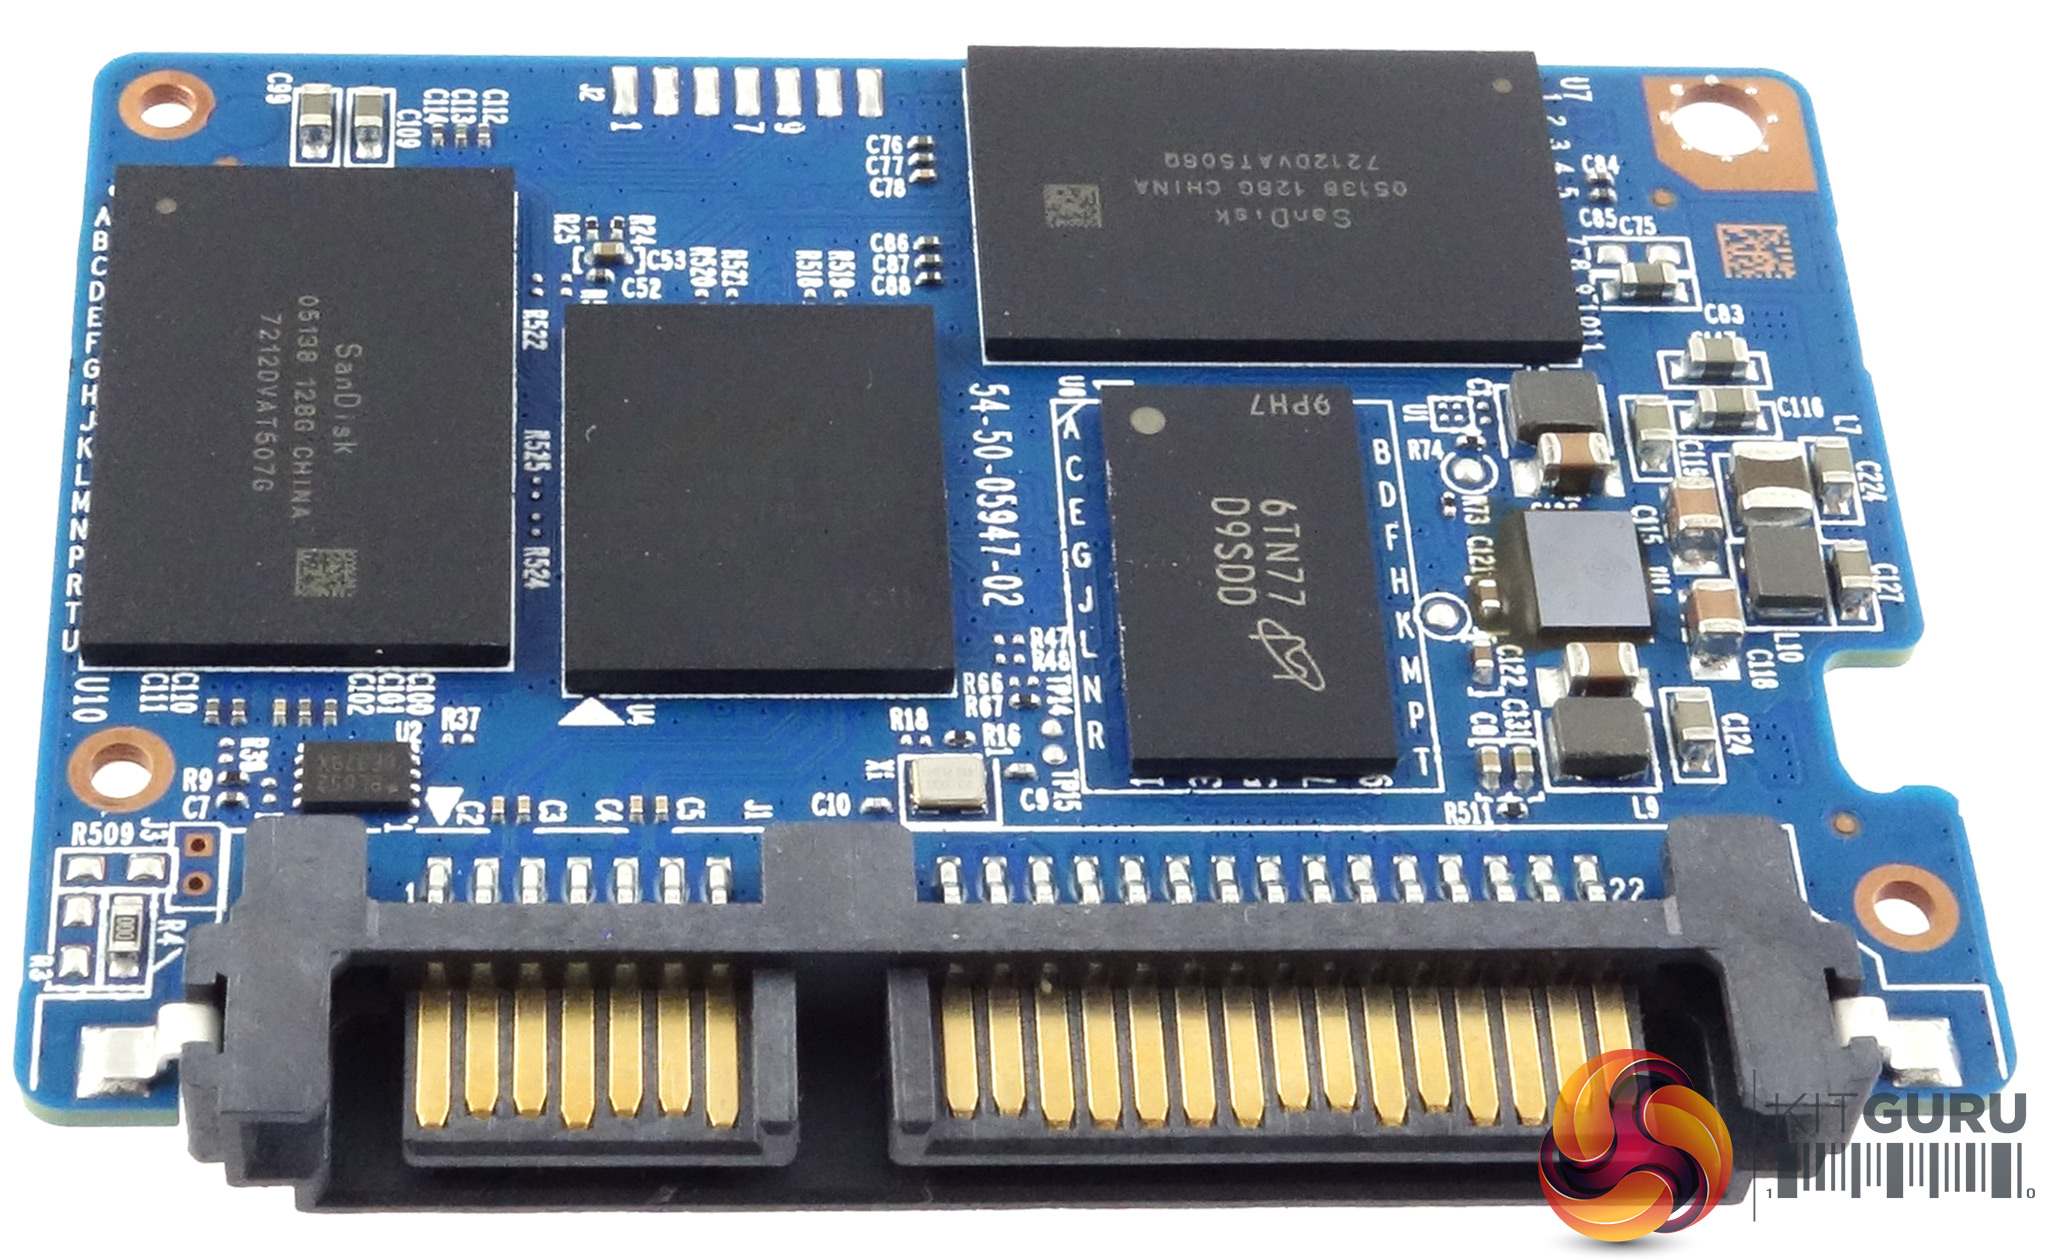 I særdeleshed salami grund WD Blue 3D NAND 500GB SSD Review | KitGuru